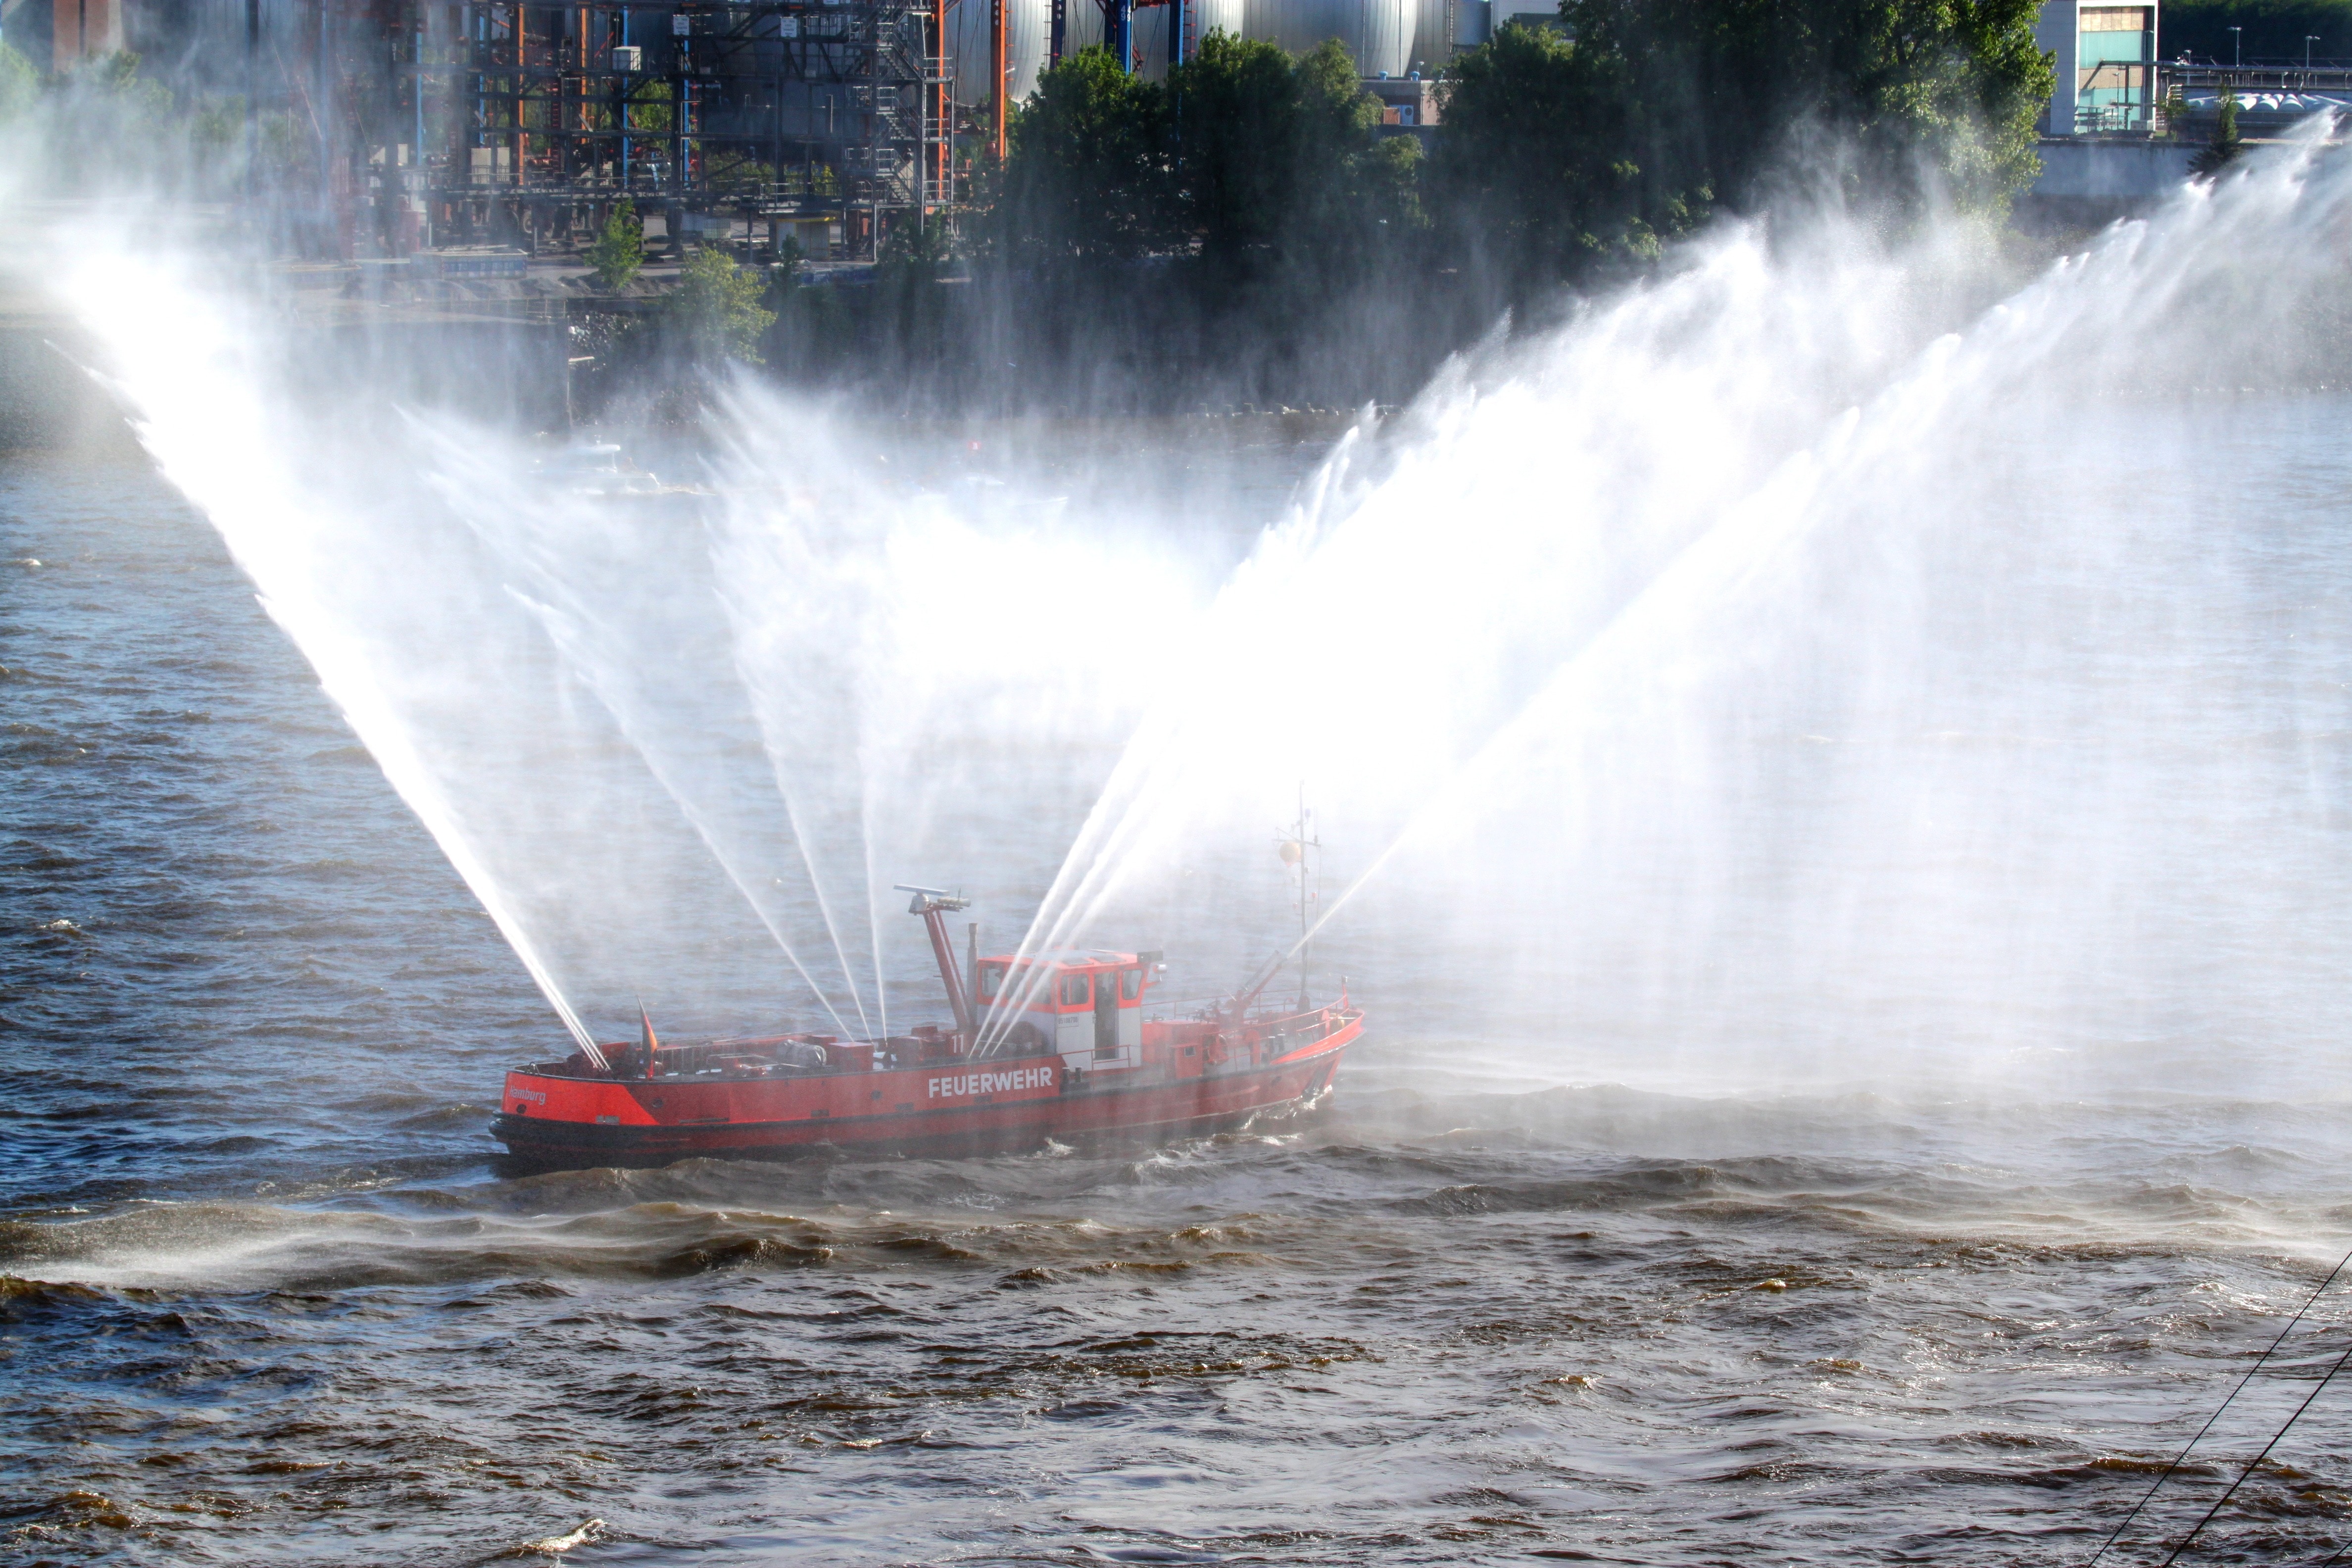 red boat spraying water